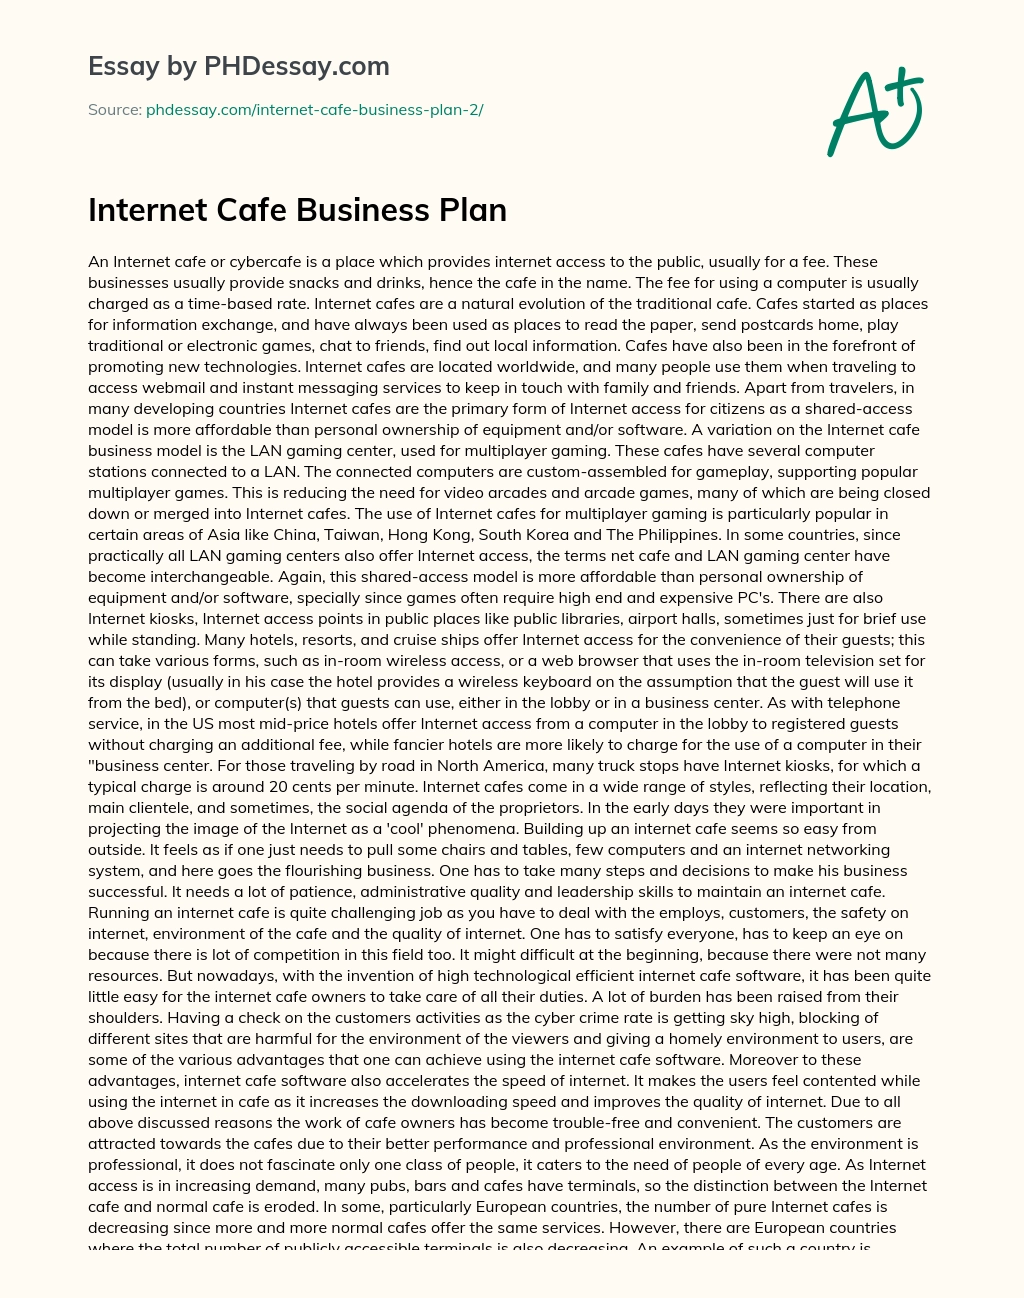 Internet Cafe Business Plan essay